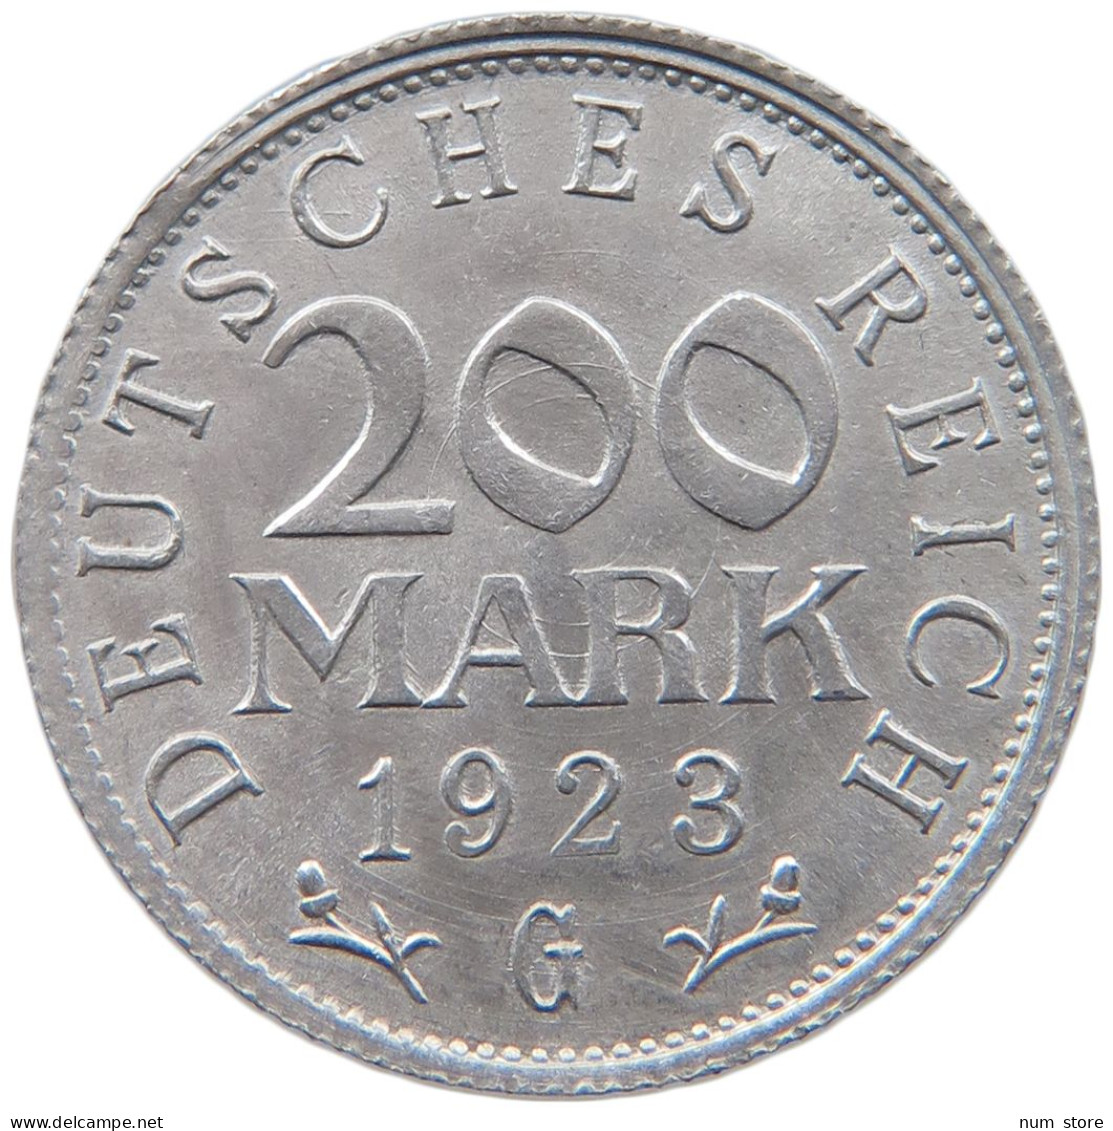 WEIMARER REPUBLIK 200 MARK 1923 G  #MA 098794 - 200 & 500 Mark